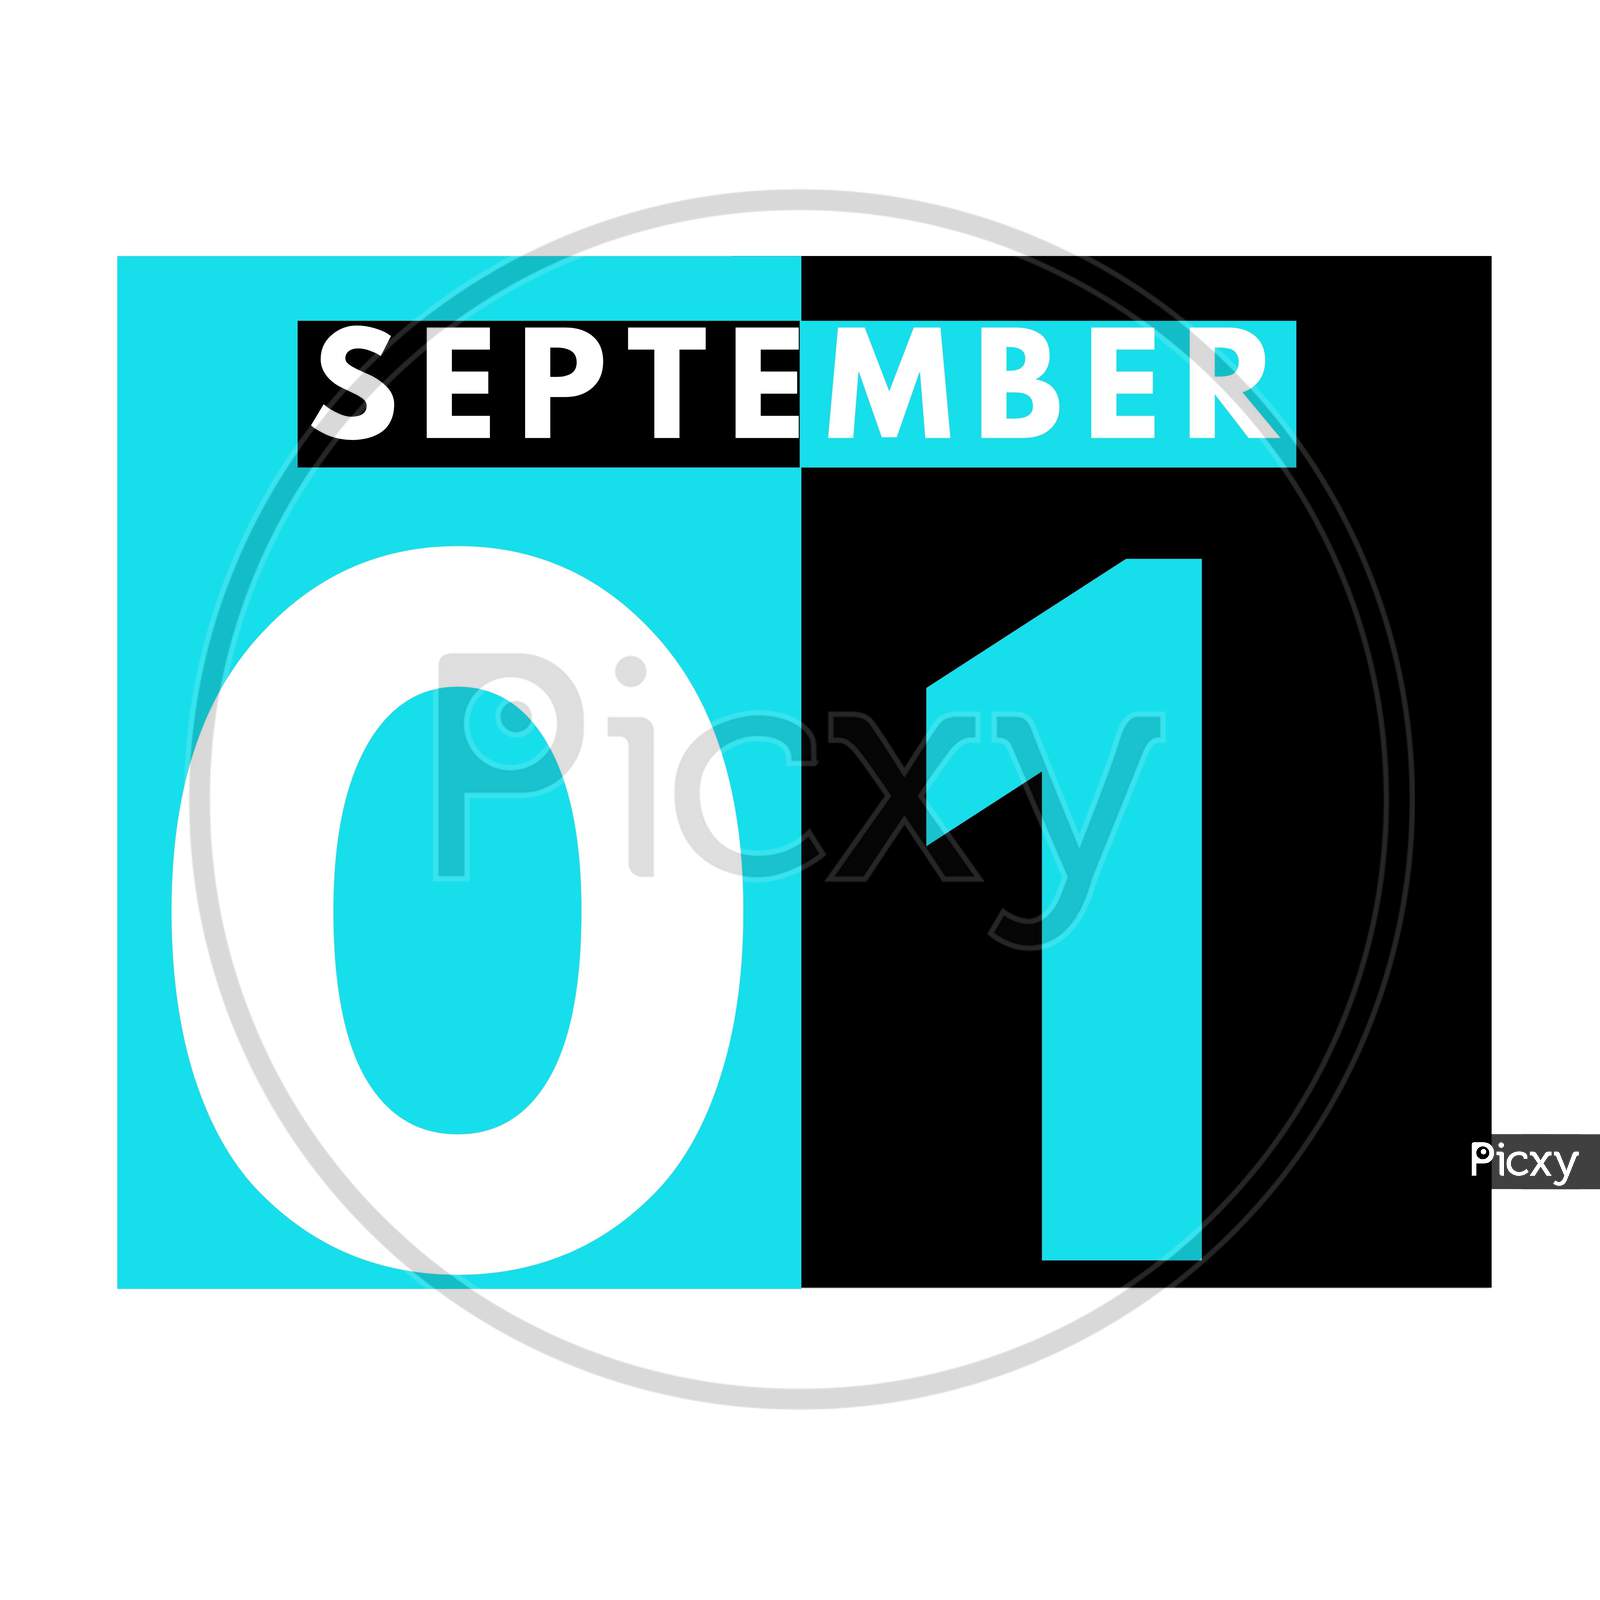 September 1. Modern Daily Calendar Icon .Date ,Day, Month .Calendar For The Month Of September